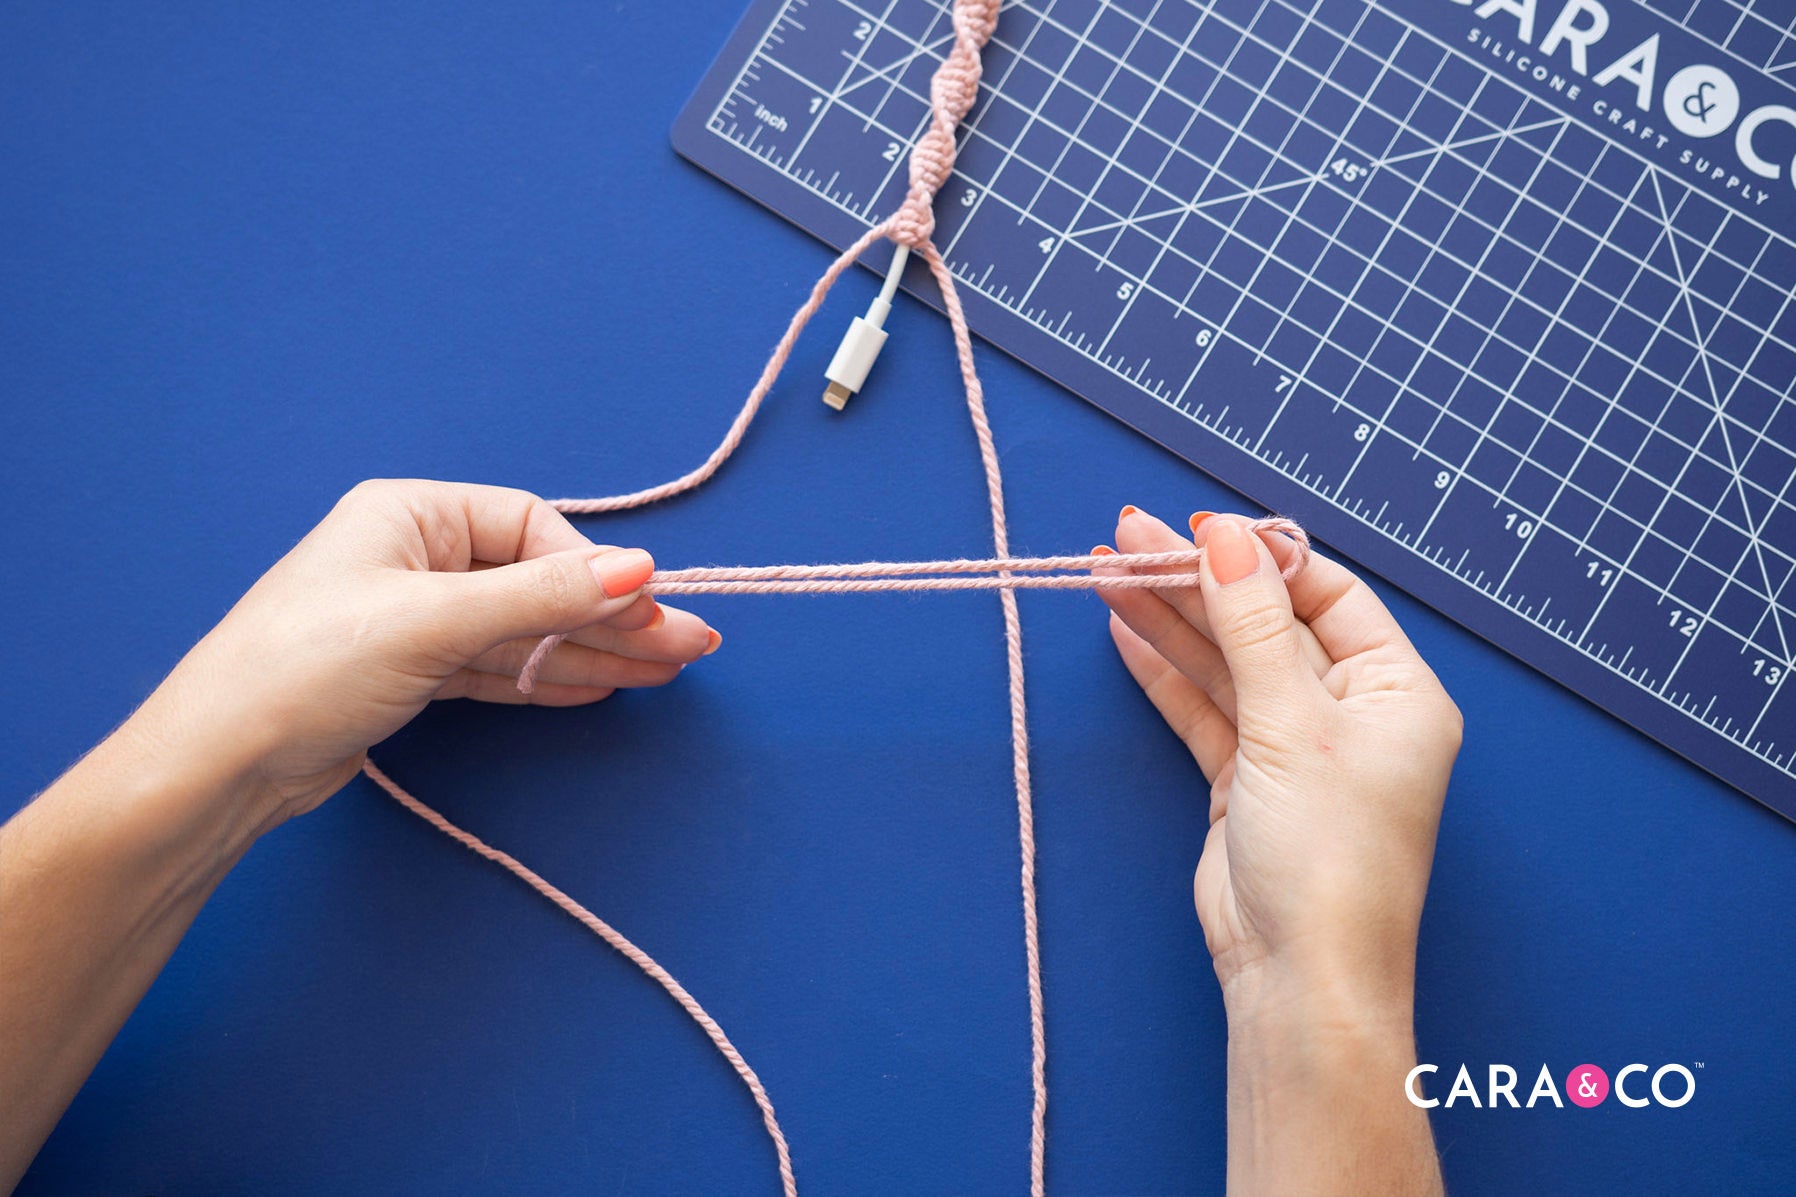 DIY Macrame braided phone charger cord - Cara & Co